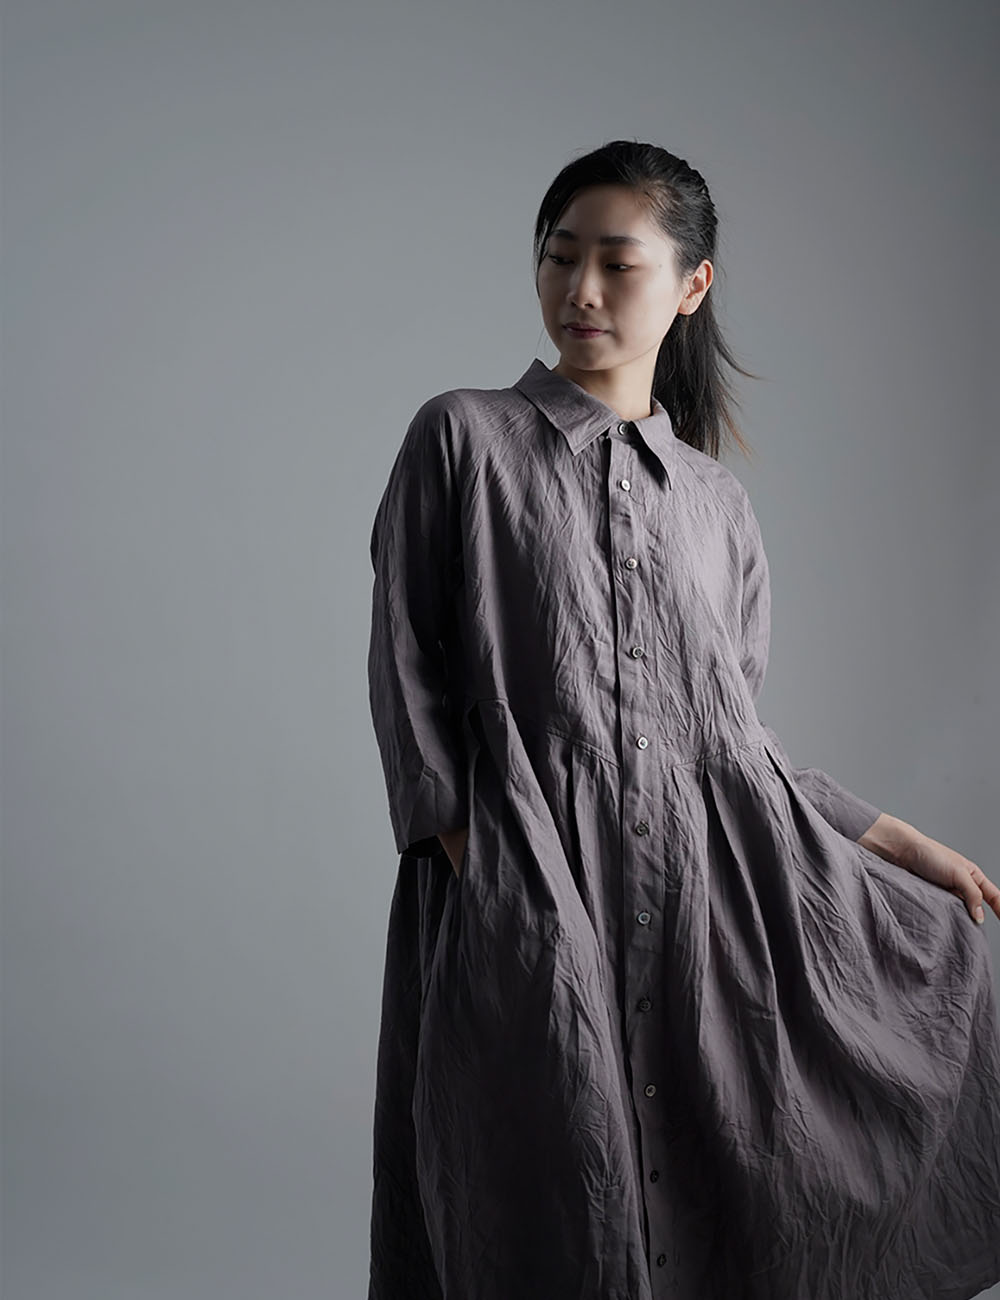 【wafu】Linen Dress　超高密度リネン　ワンピース / 茶鼠(ちゃねずみ) a013j-cnz1